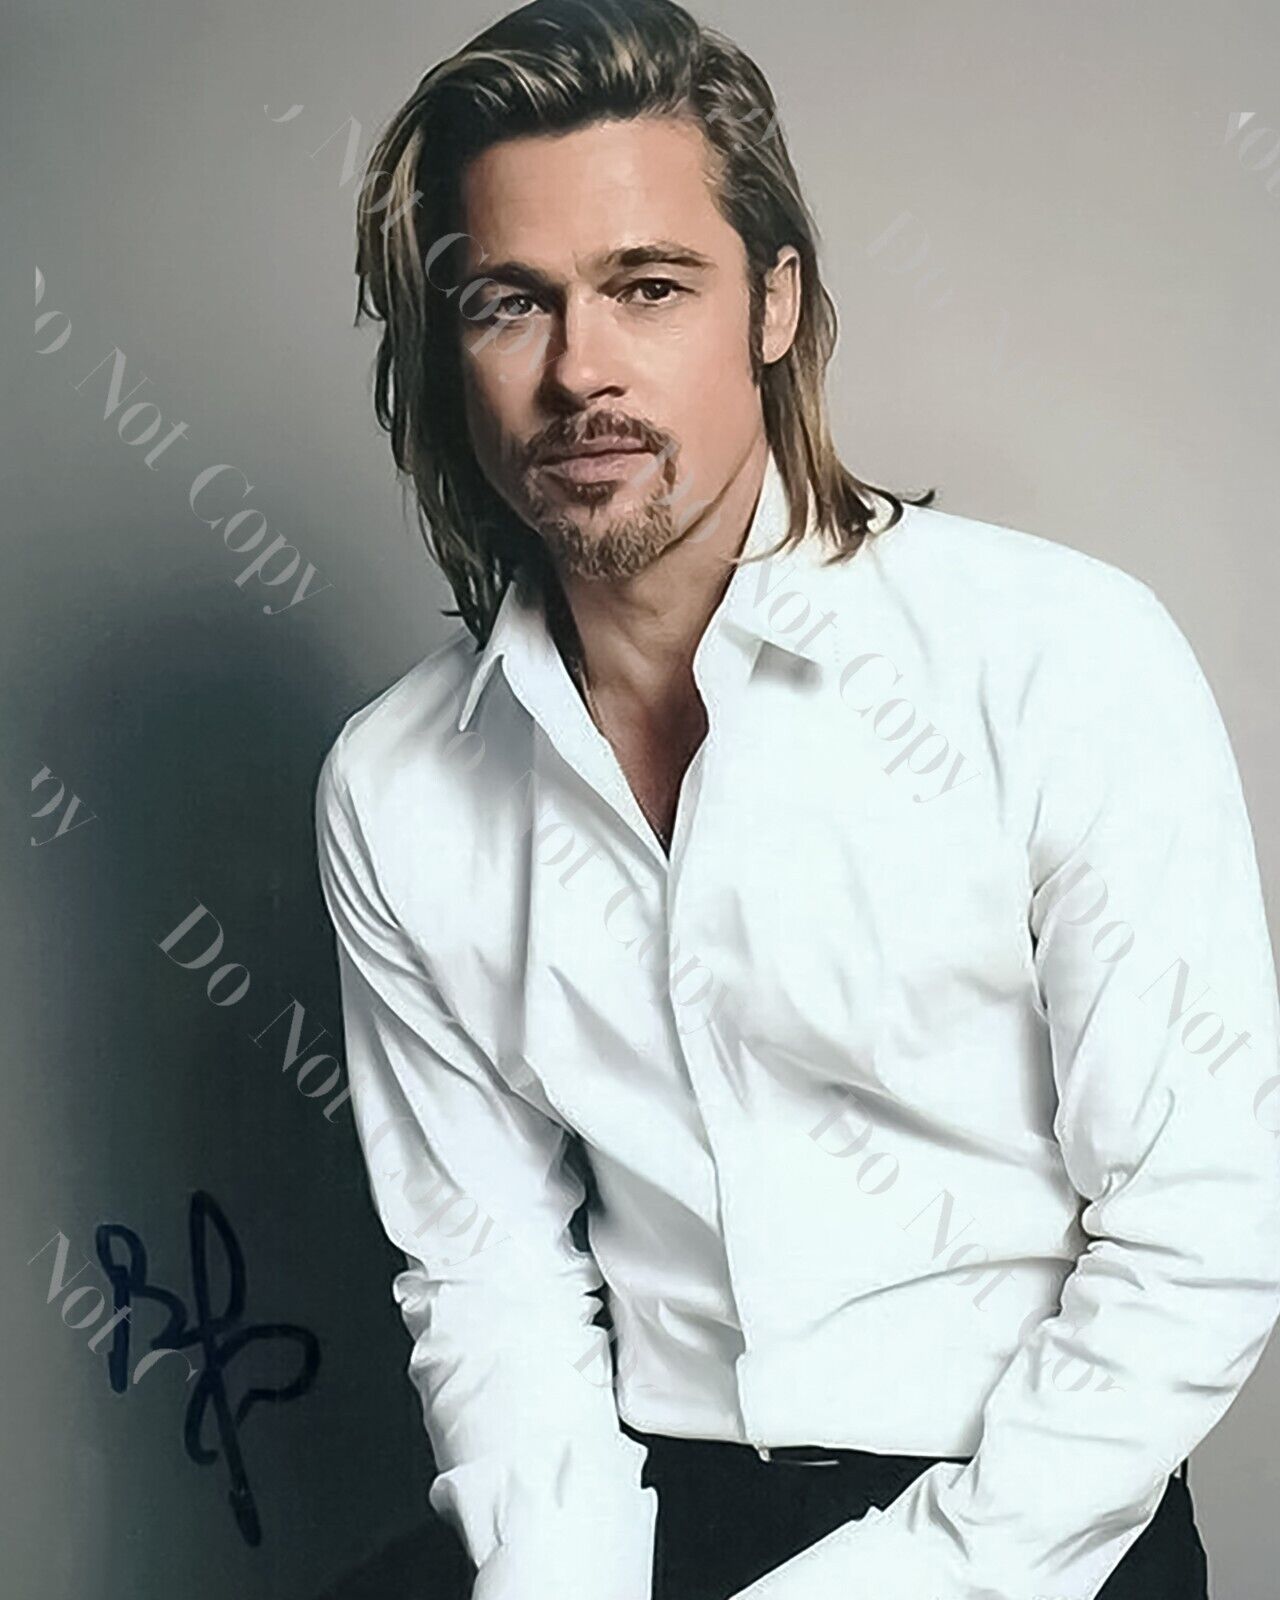 Brad Pitt 05 | Signed Photograph 8x10 | Actor | REPRINT